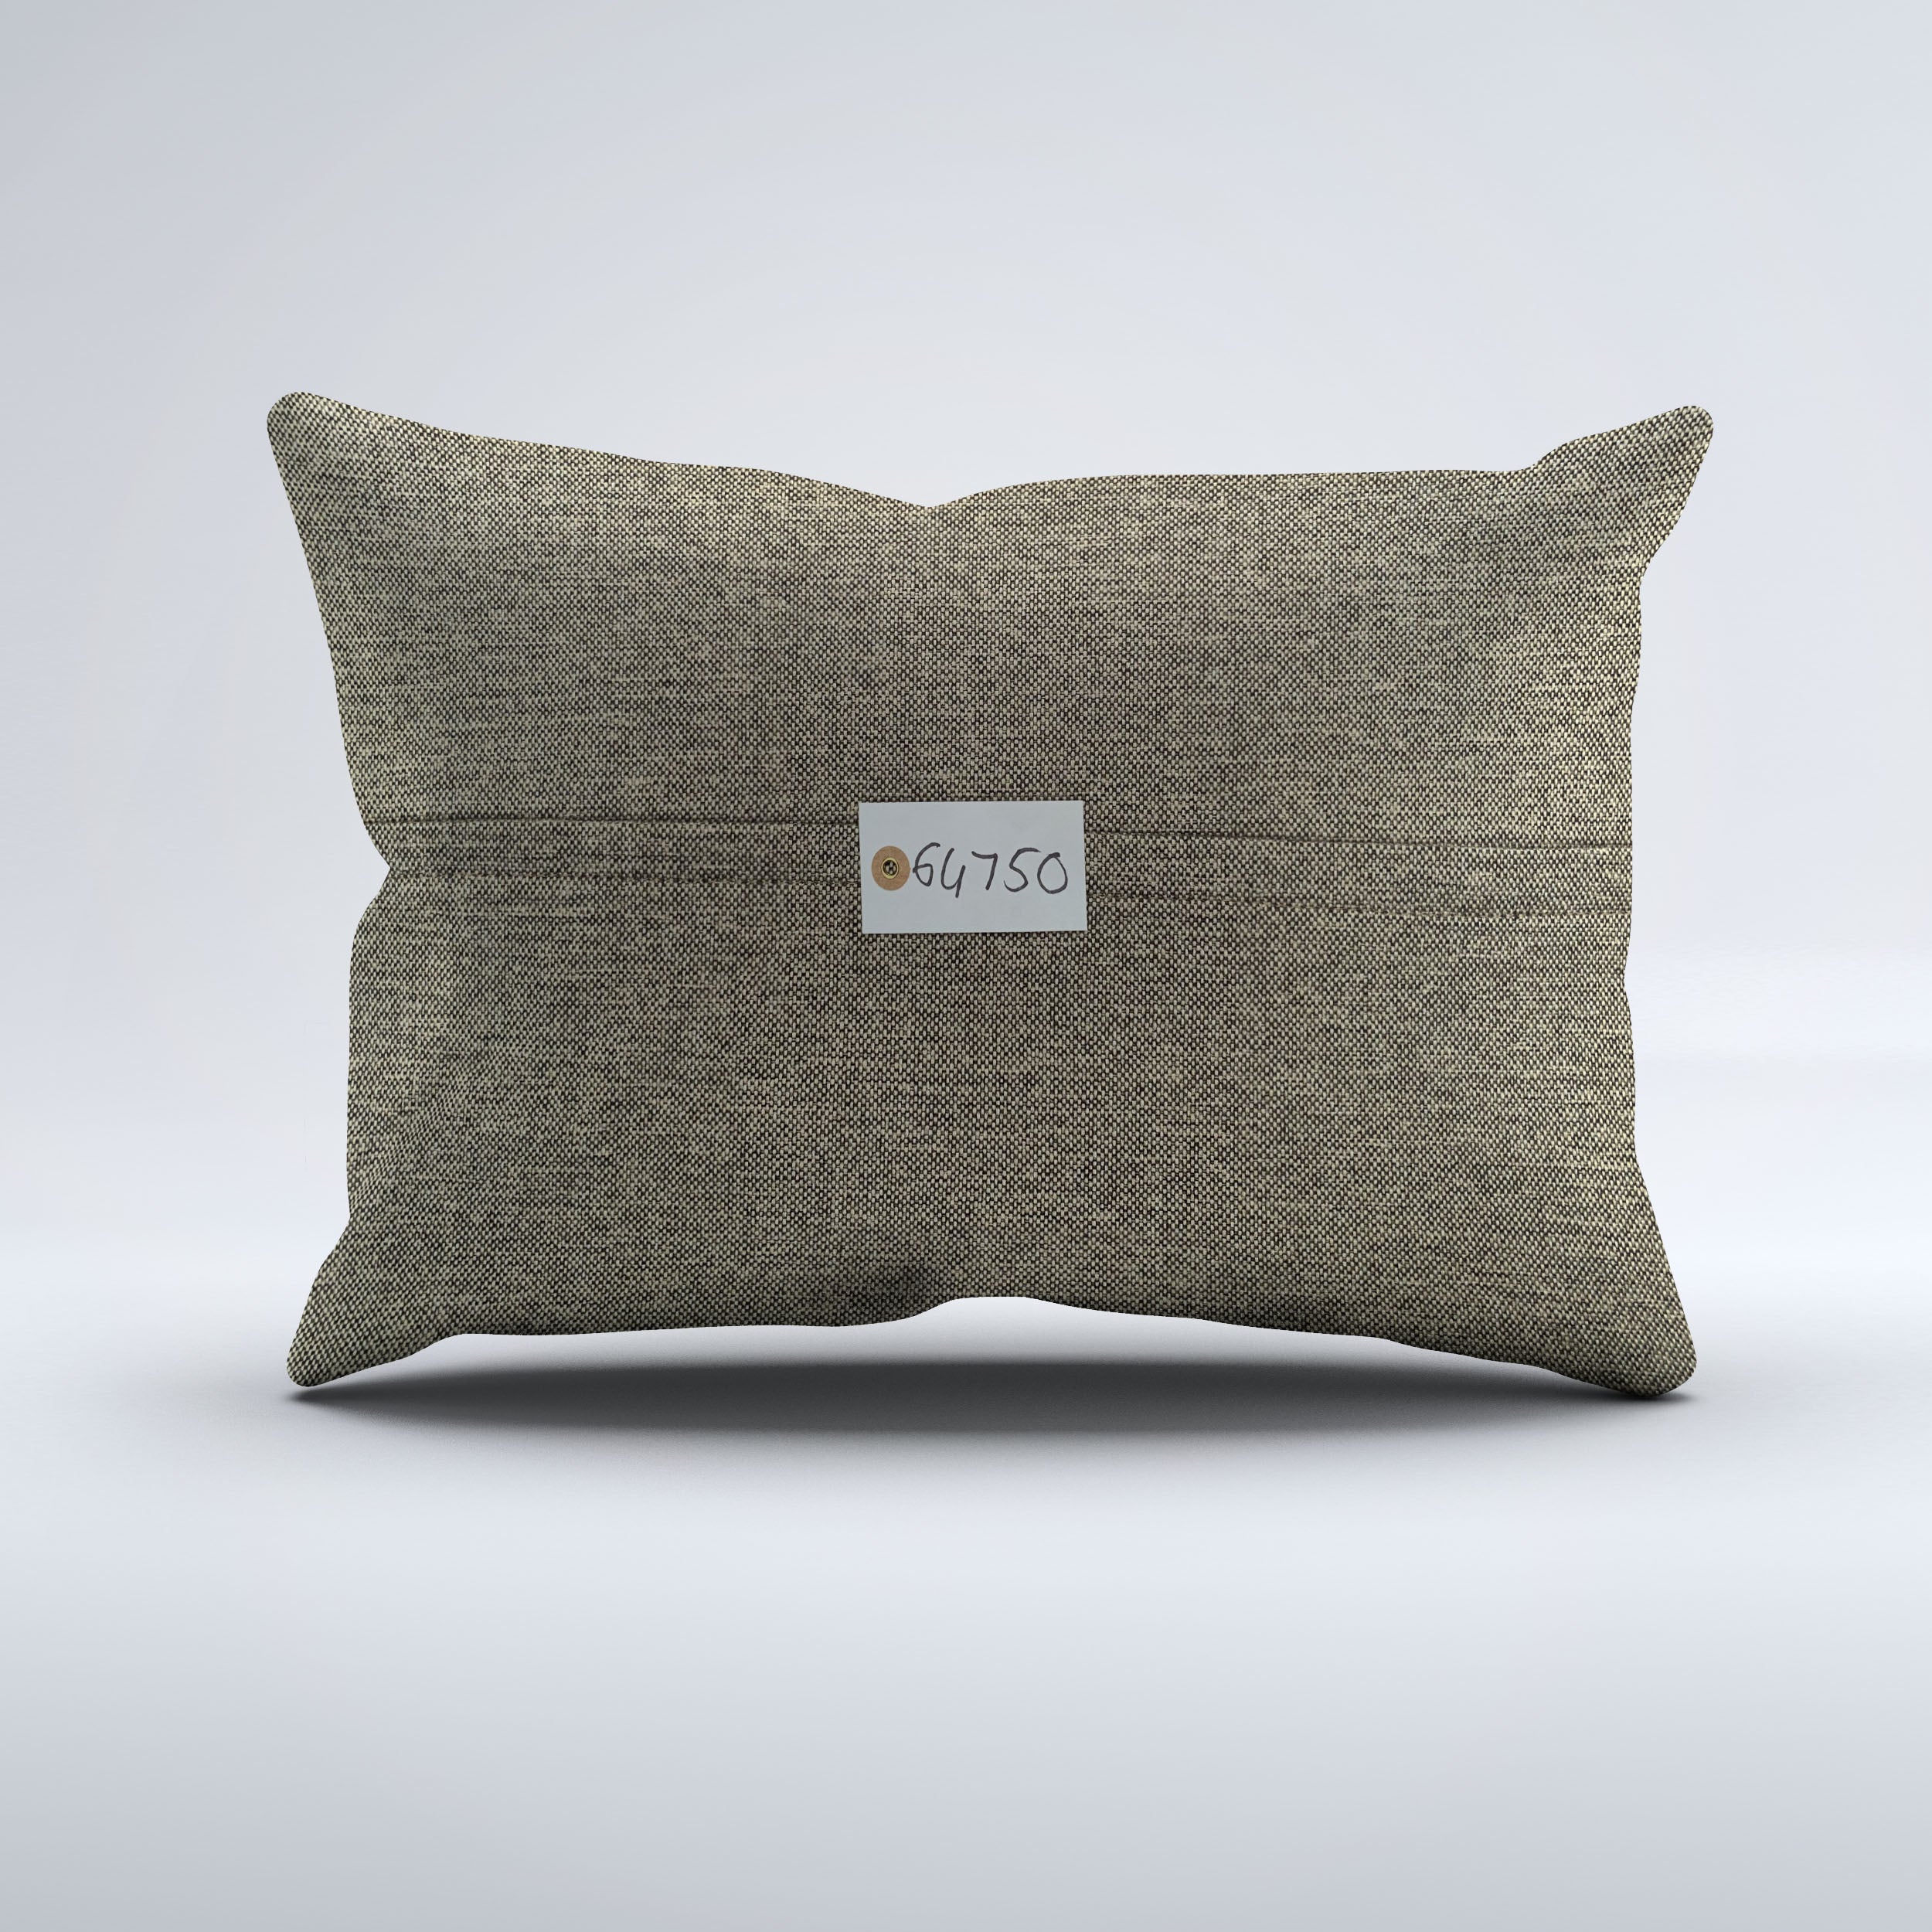 Vintage Turkish Kilim Cushion Cover 60x40 cm Square Wool Kelim Pillowcase 64750